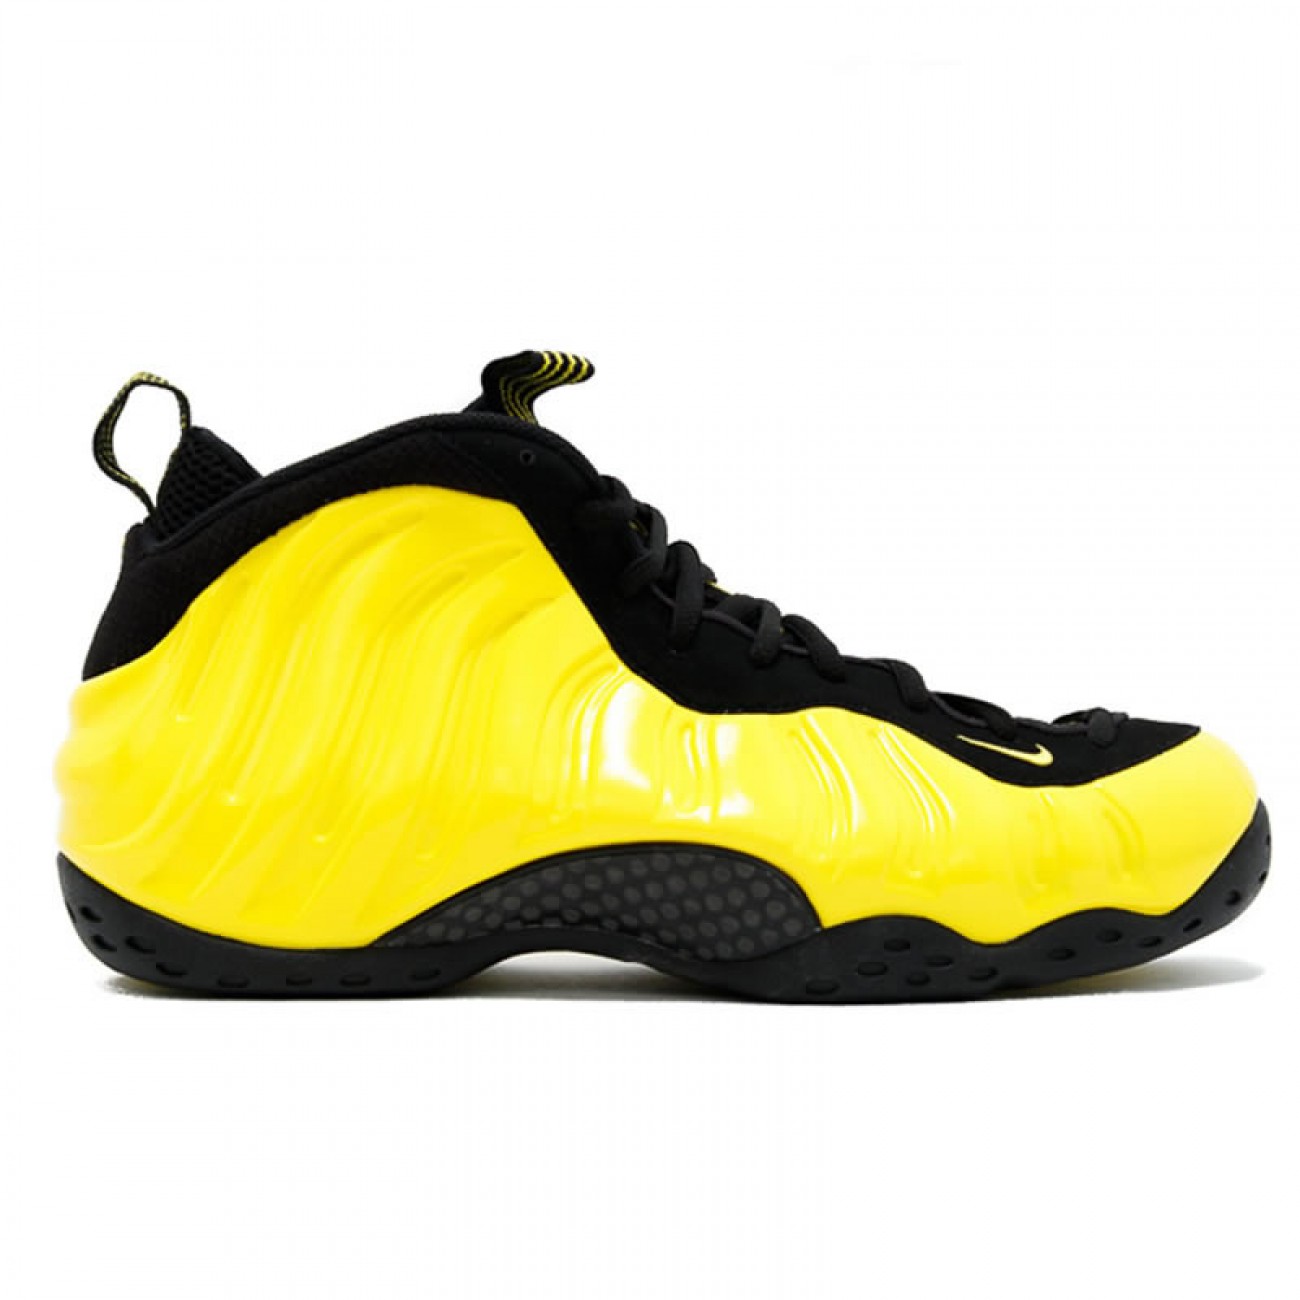 Nike Air Foamposite One "Wu Tang" Optic Yellow/Black Mens Shoes 314996-701